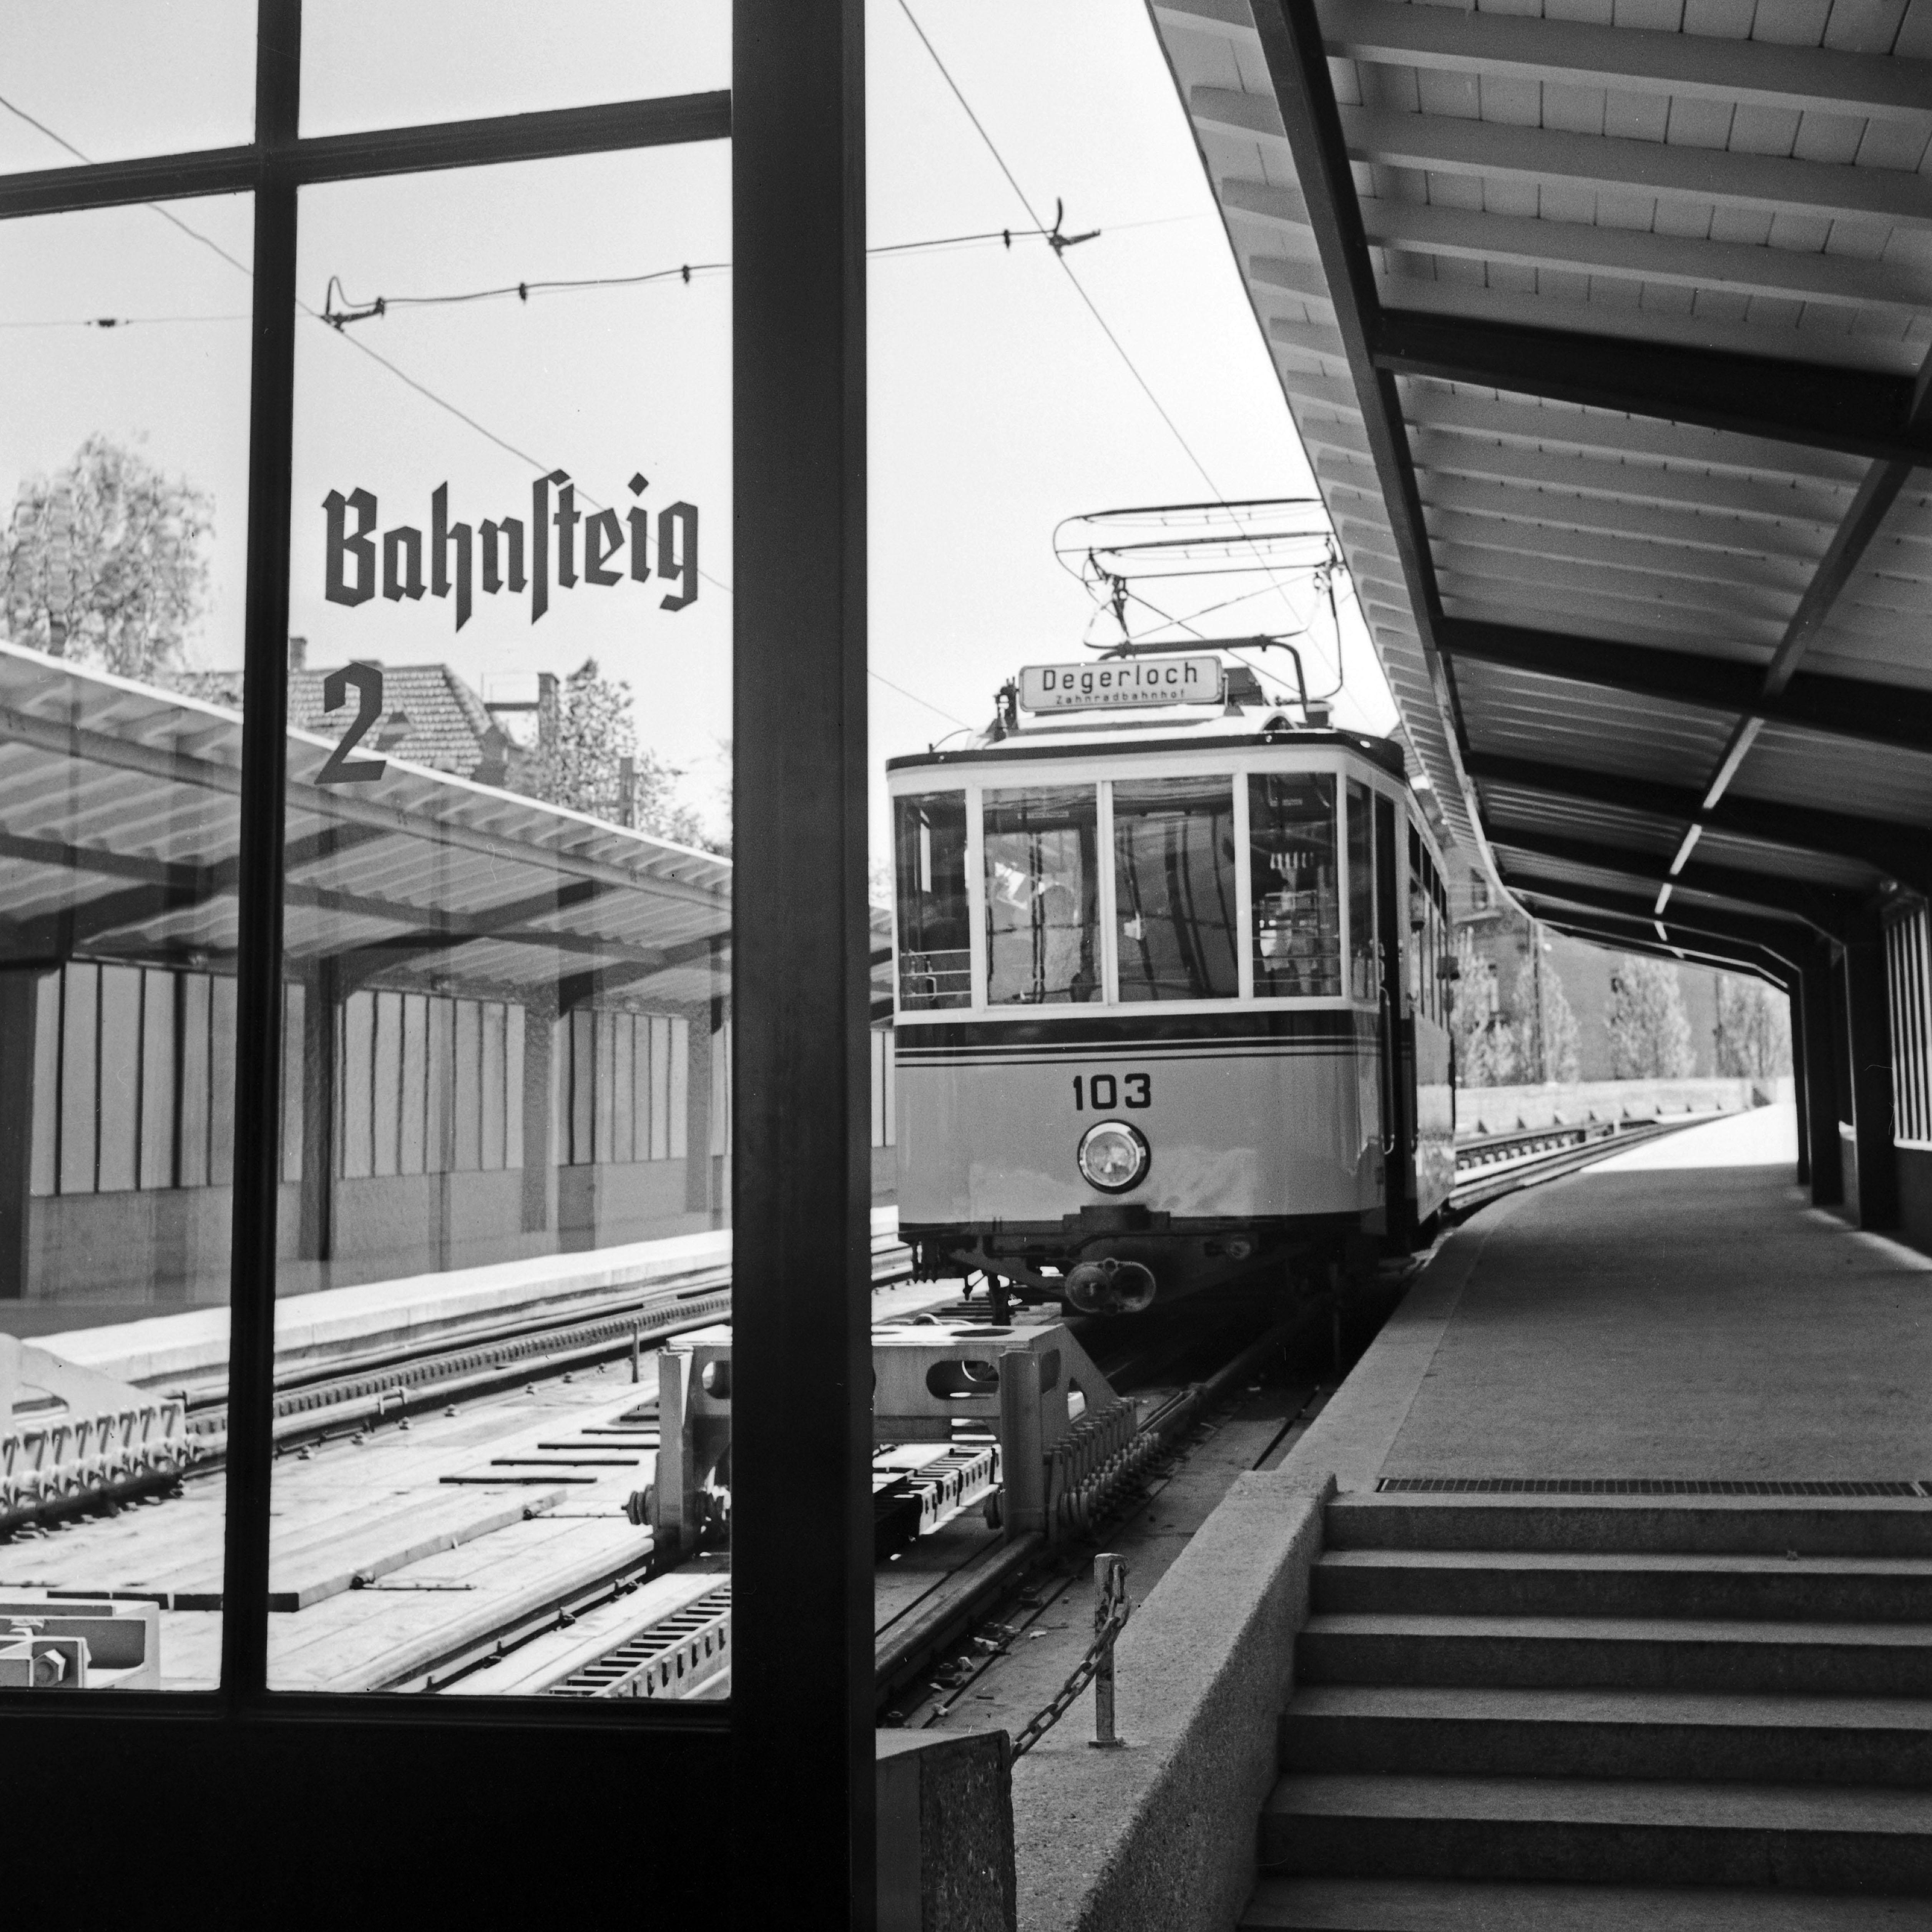 Karl Heinrich Lämmel Black and White Photograph - Train to Degerloch waiting at platform, Stuttgart Germany 1935, Printed Later